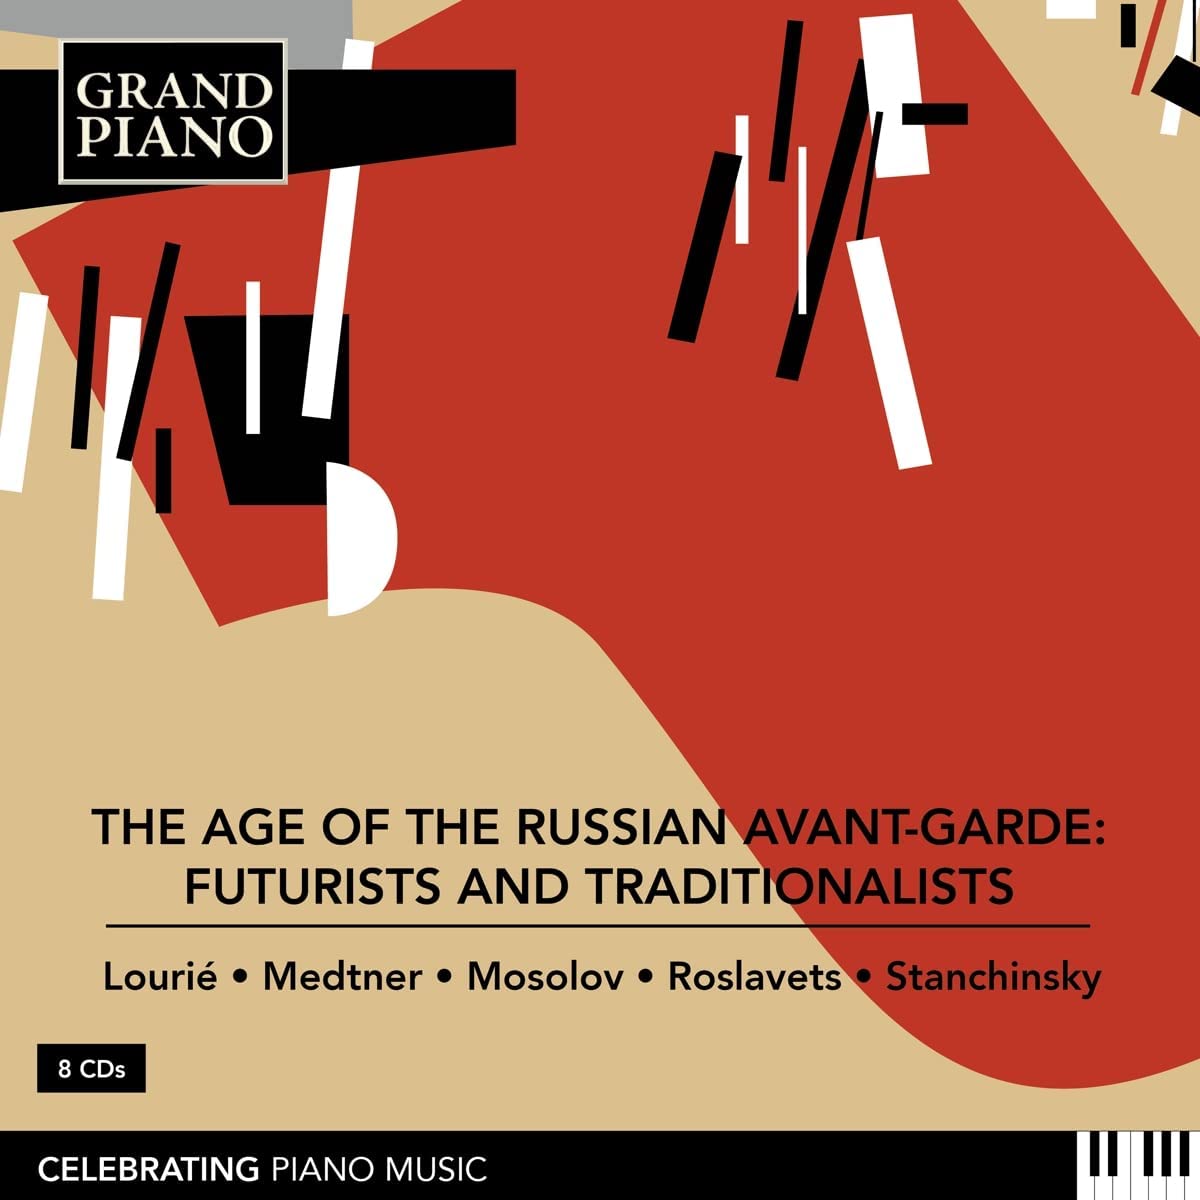 Olga Andryushchenko 러시아 아방가르드의 시대 - 미래주의자와 전통주의 (The Age of the Russian Avant-Garde - Futurists and Traditionalists) 